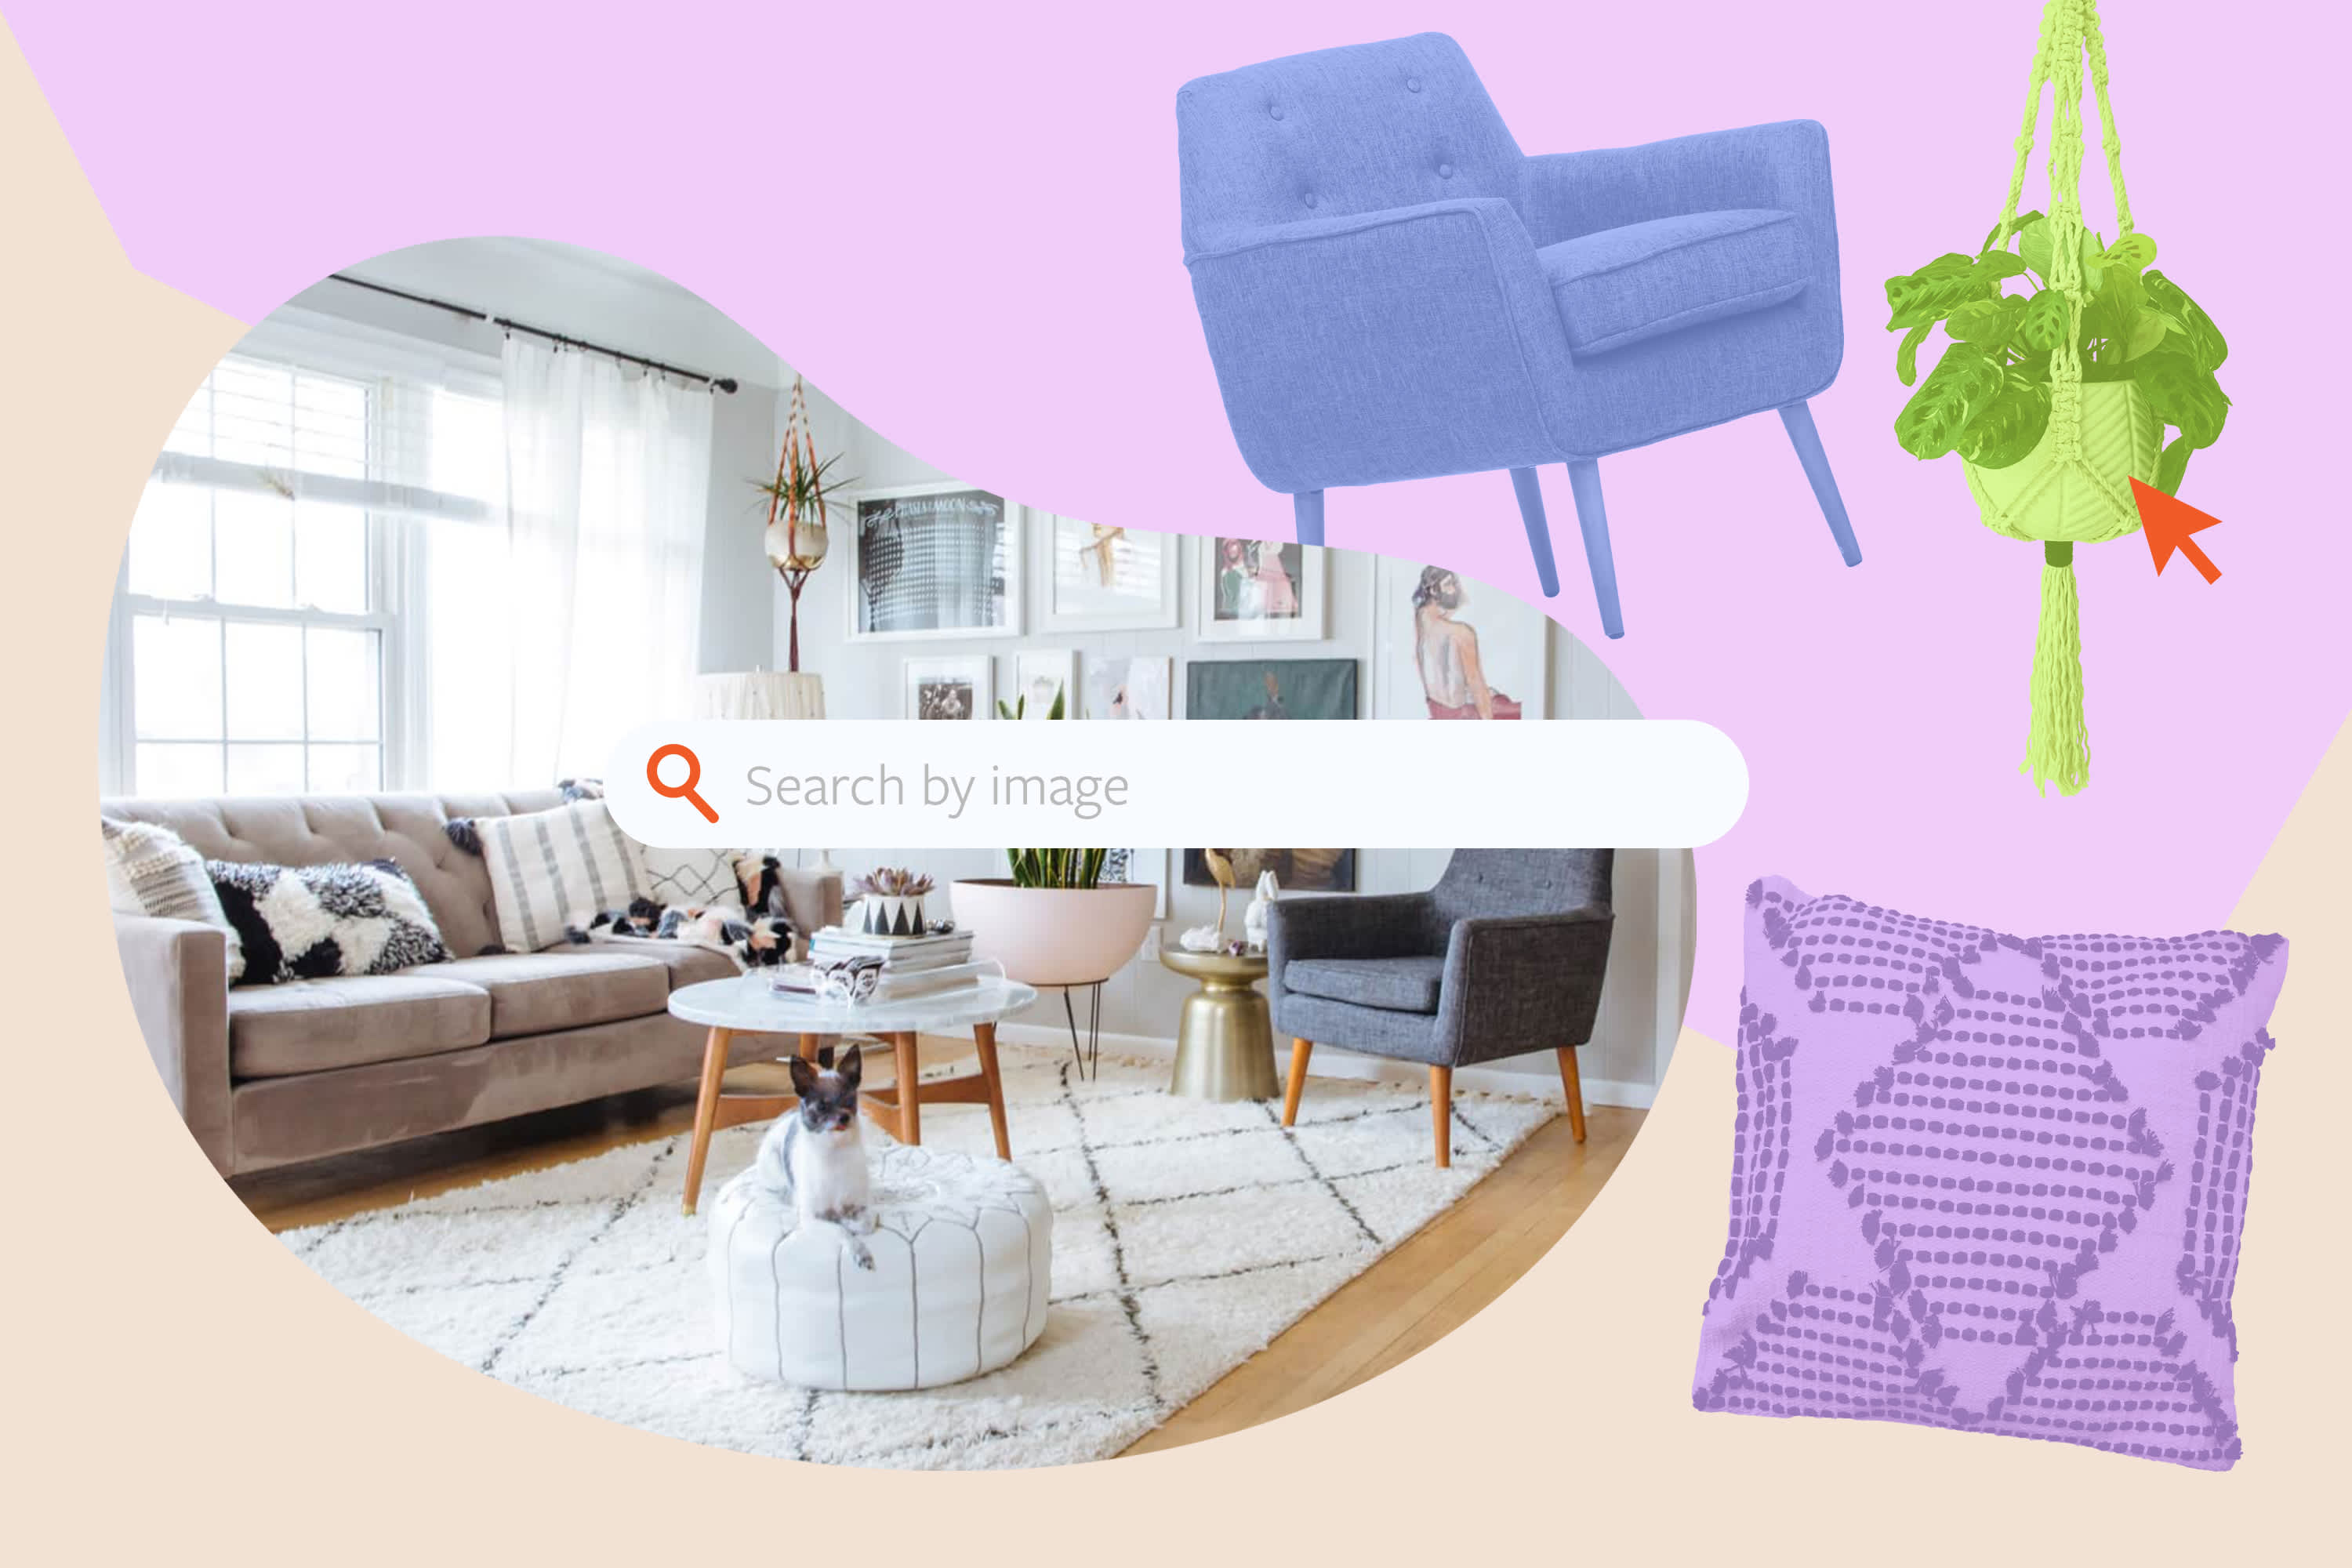 https://cdn.apartmenttherapy.info/image/upload/v1684505216/at/art/design/2023-05/at-Furniture-Image-Search-1.jpg